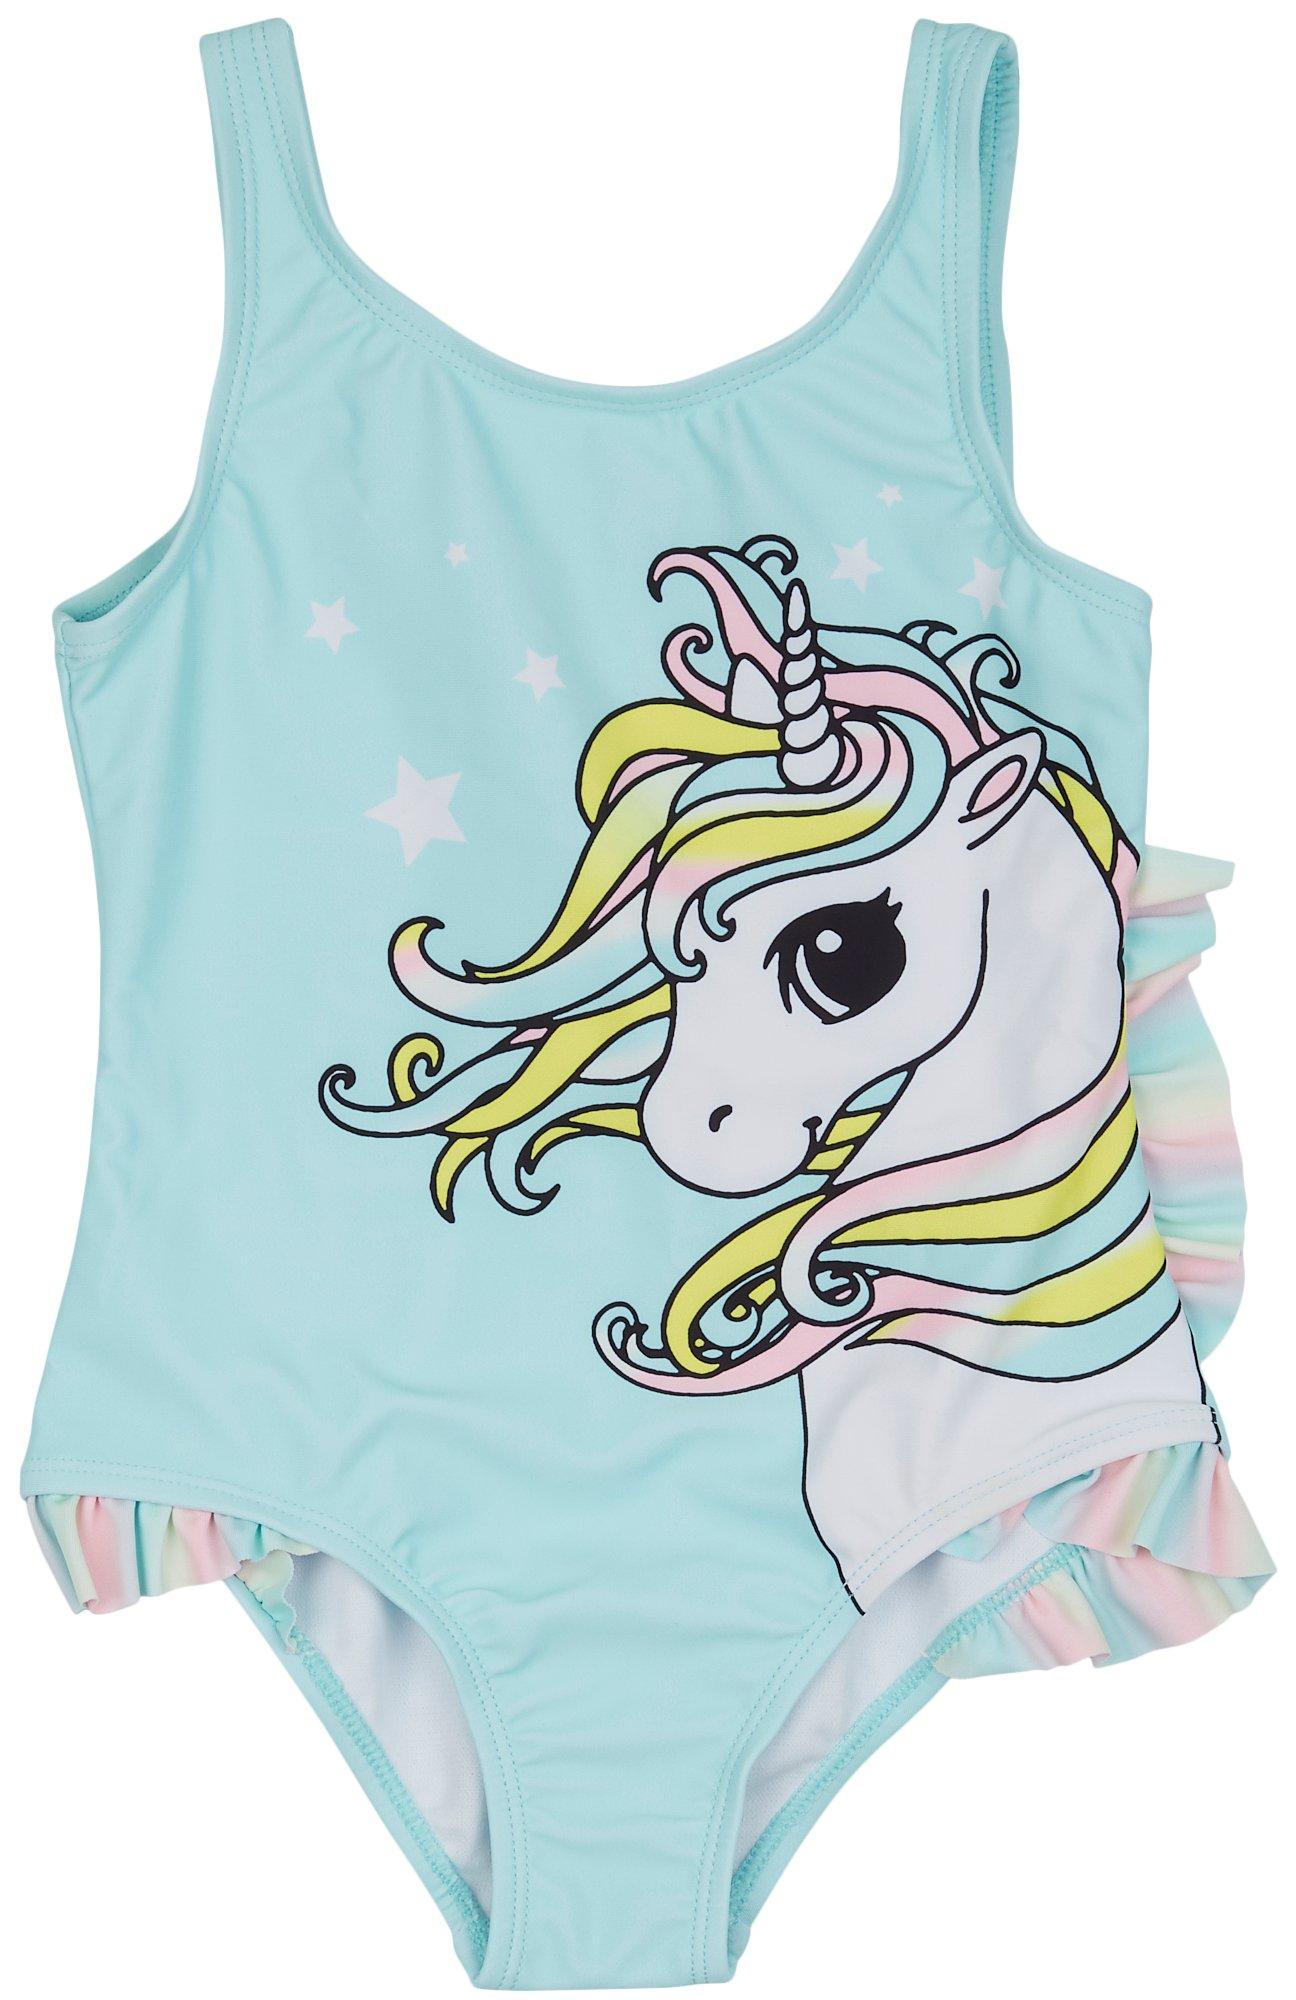 Ingear Swim Toddler Girls Unicorn Ruffle Swimsuit